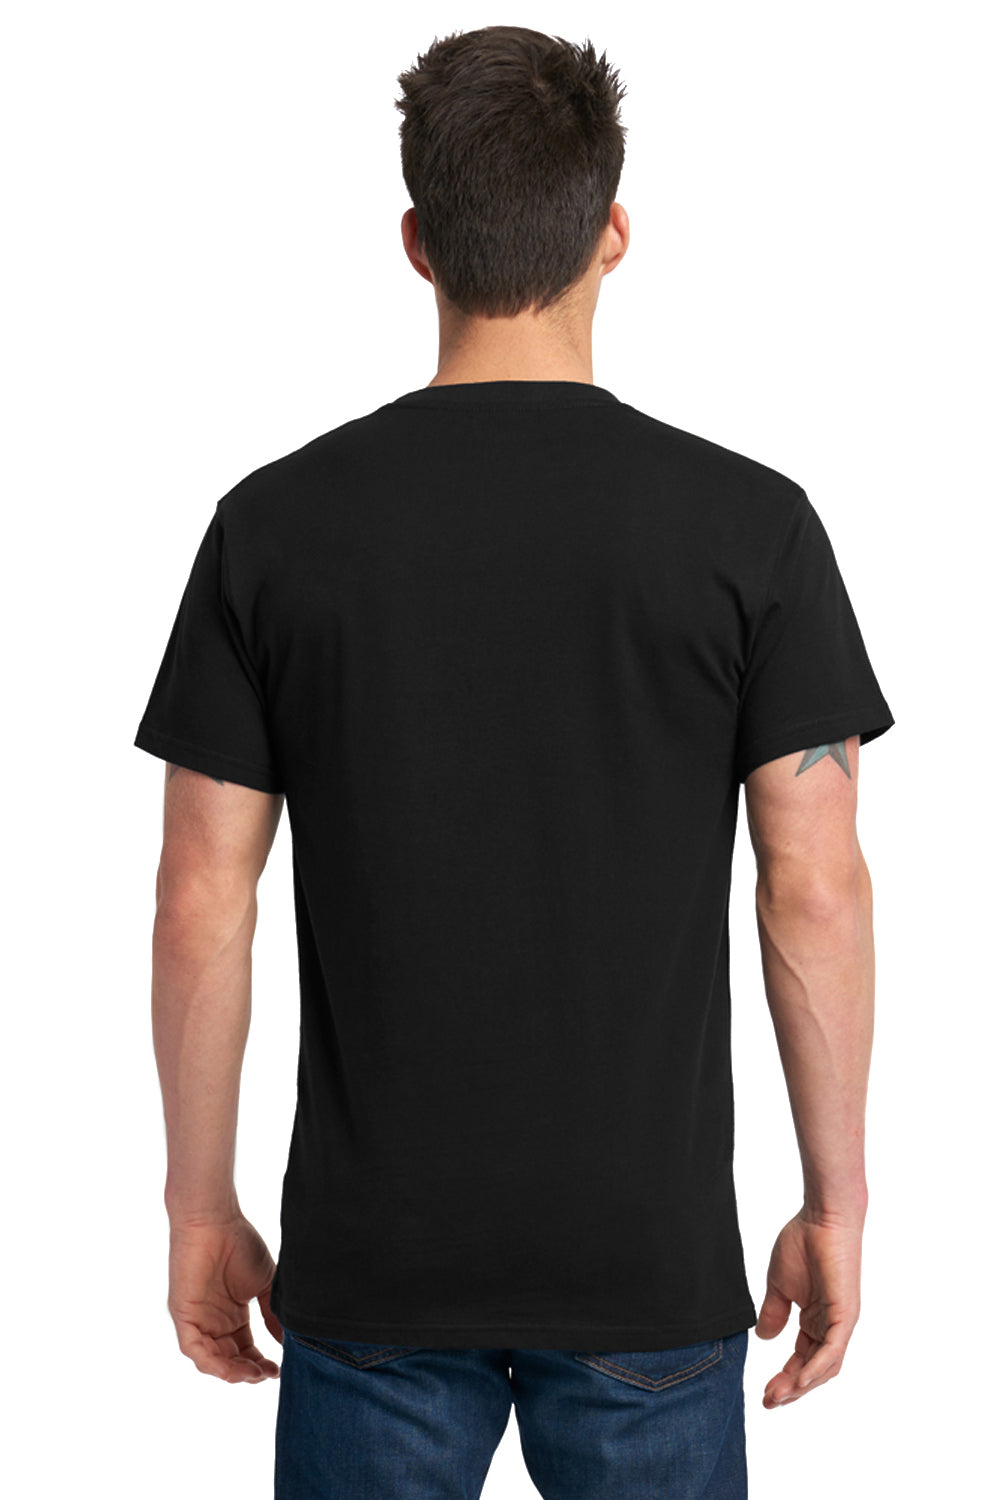 Next Level 7410 Mens Inspired Dye Jersey Short Sleeve Crewneck T-Shirt Black Back